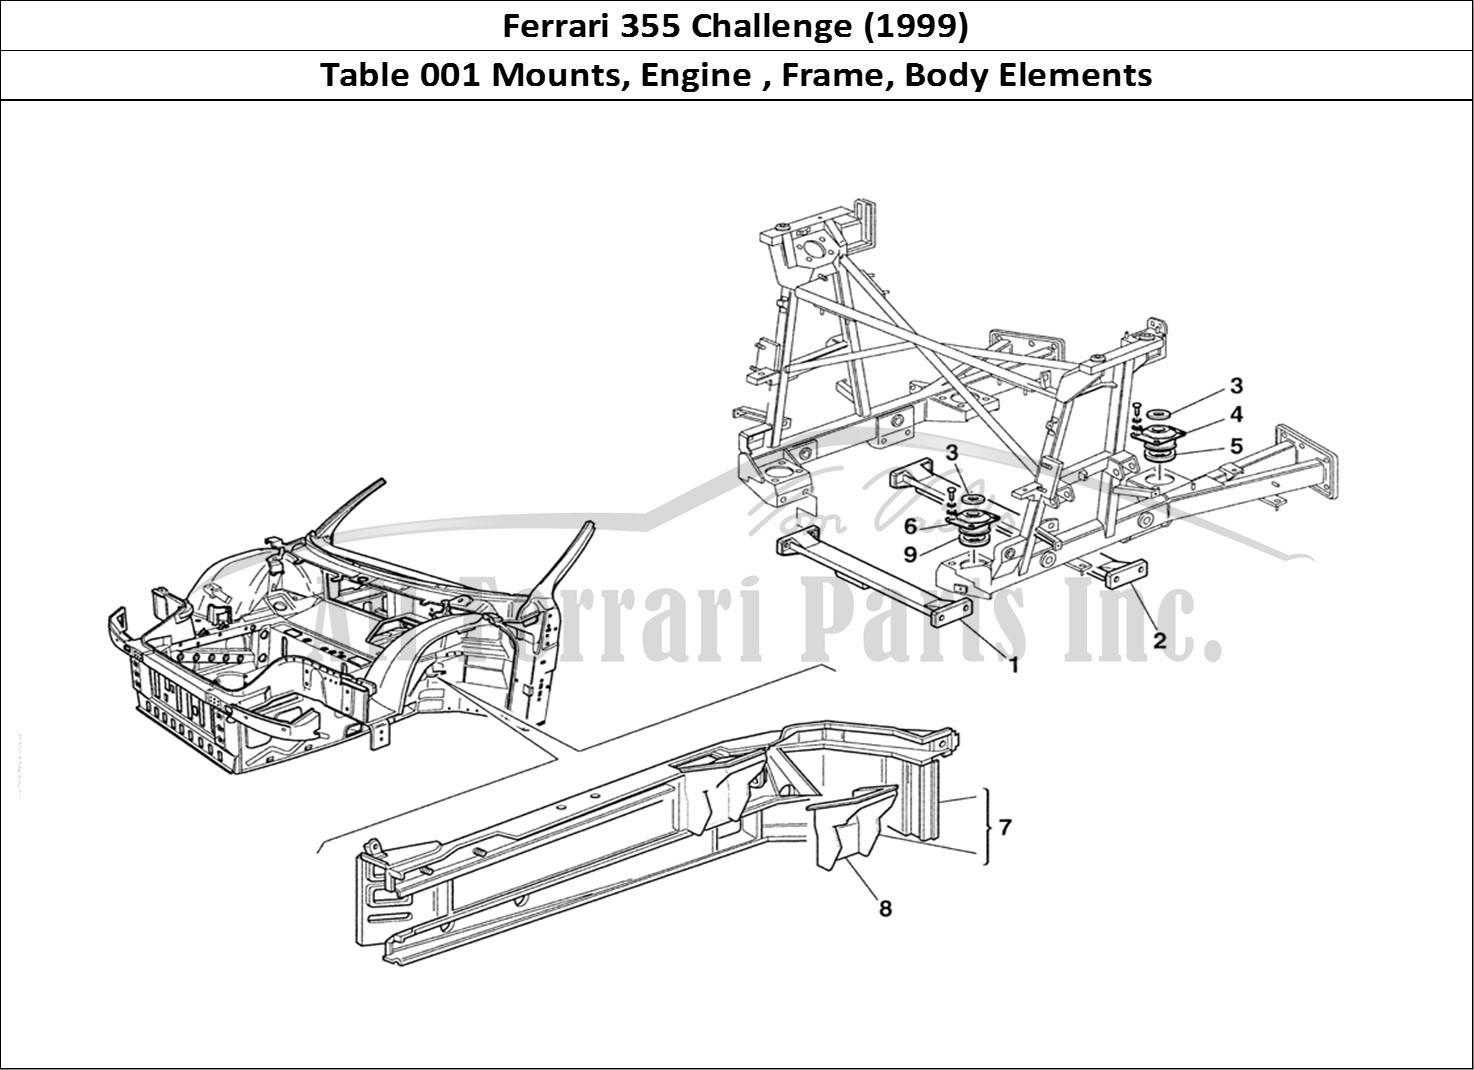 Ferrari Parts Ferrari 355 Challenge (1999) Page 001 Engine Supports - Chassis